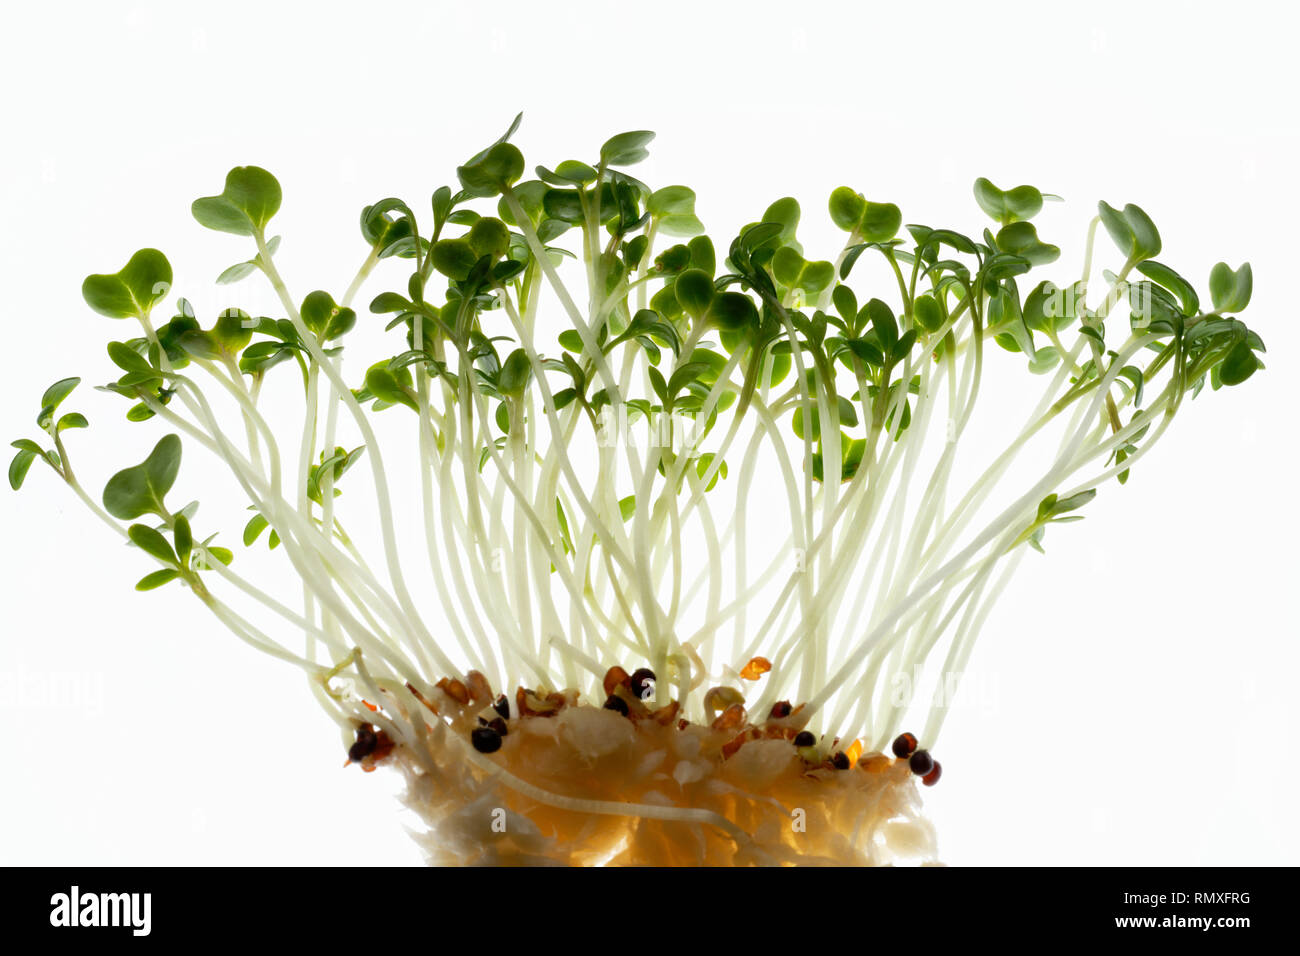 Garden cress. Edible salad plant. Also known as mustard cress. Stock Photo